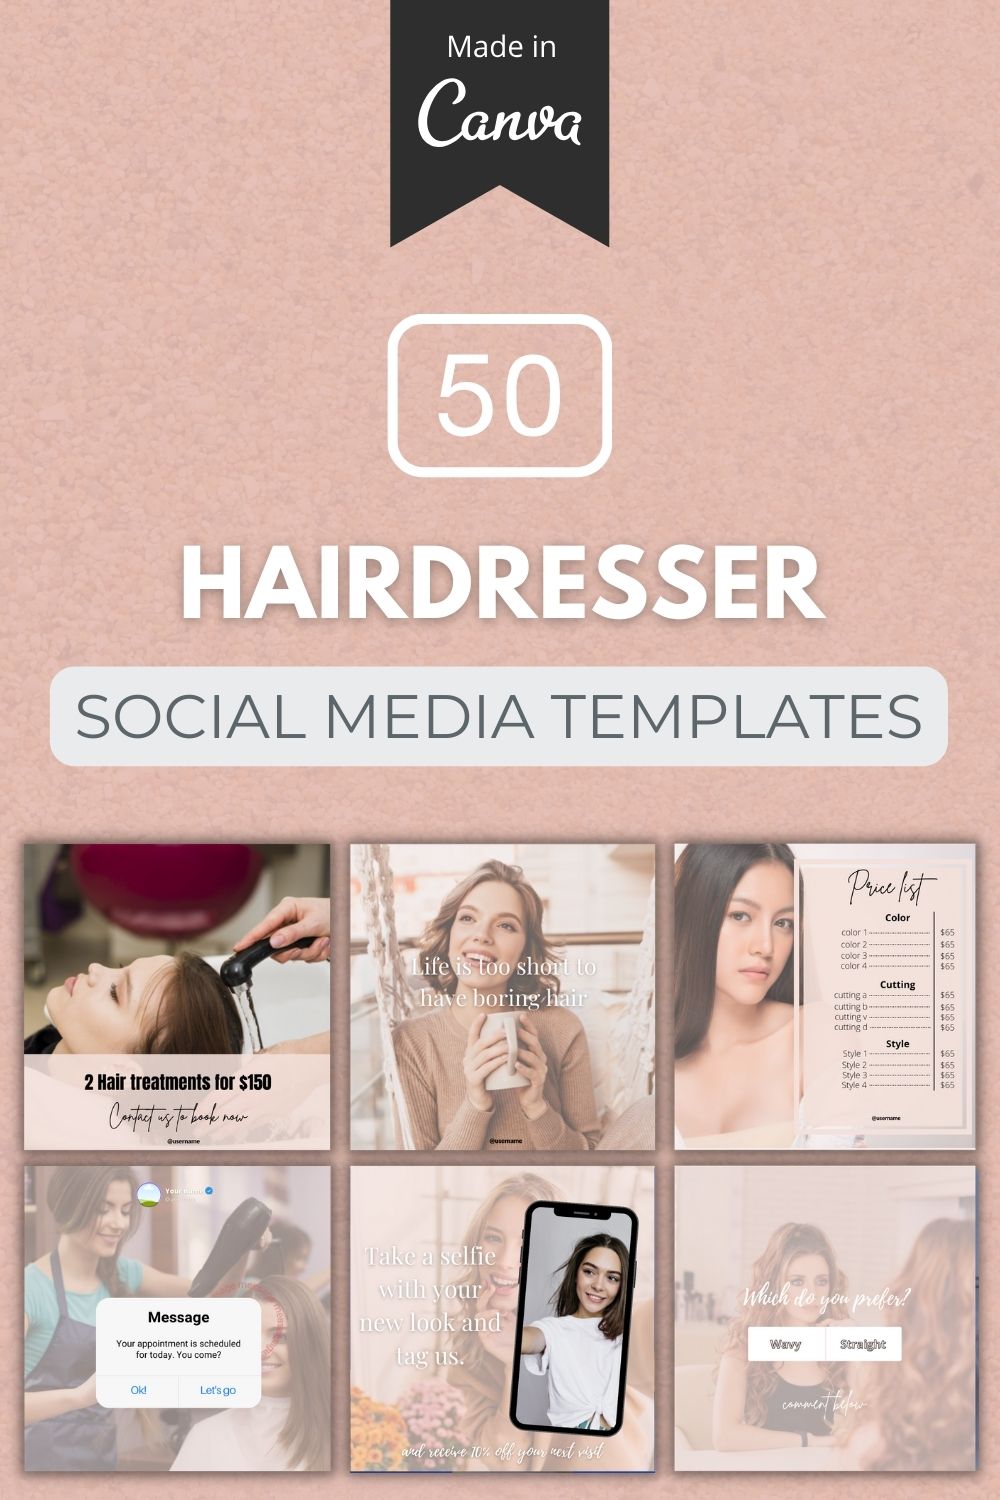 50 Premium Hairdresser Canva Templates For Social Media pinterest preview image.